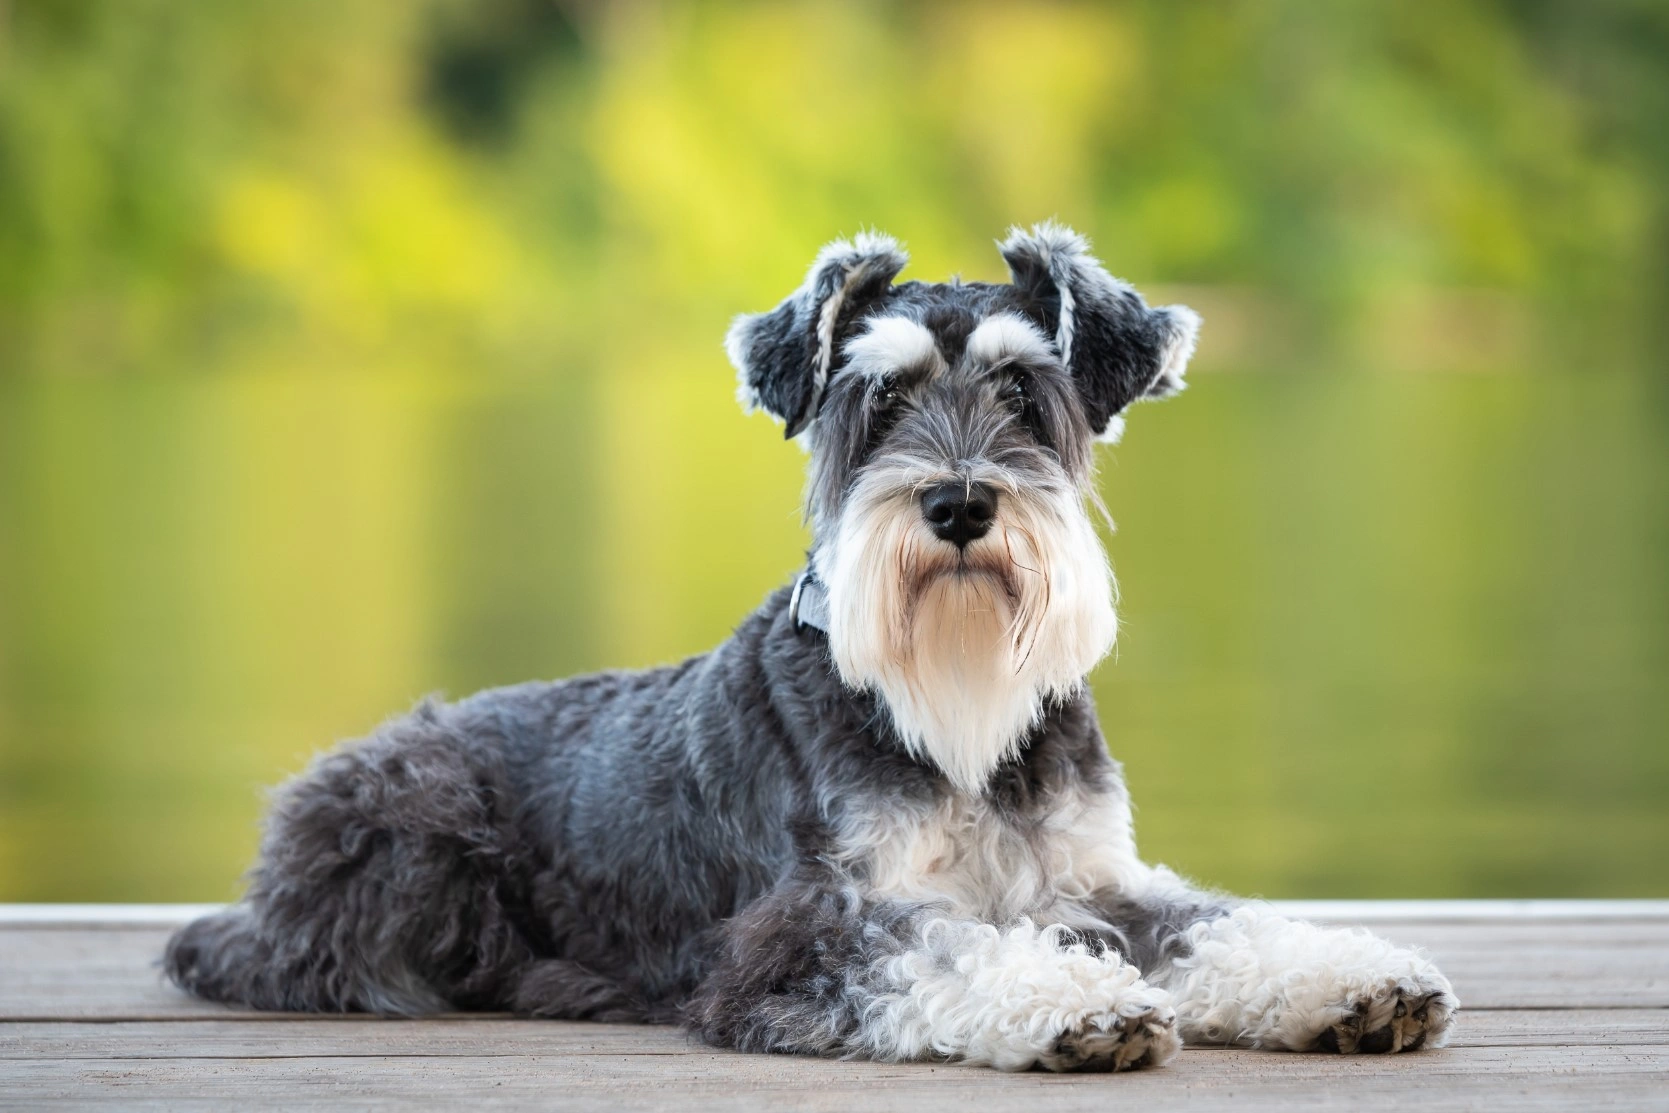 Miniature Schnauzer Dogs Breed - Information, Temperament, Size & Price